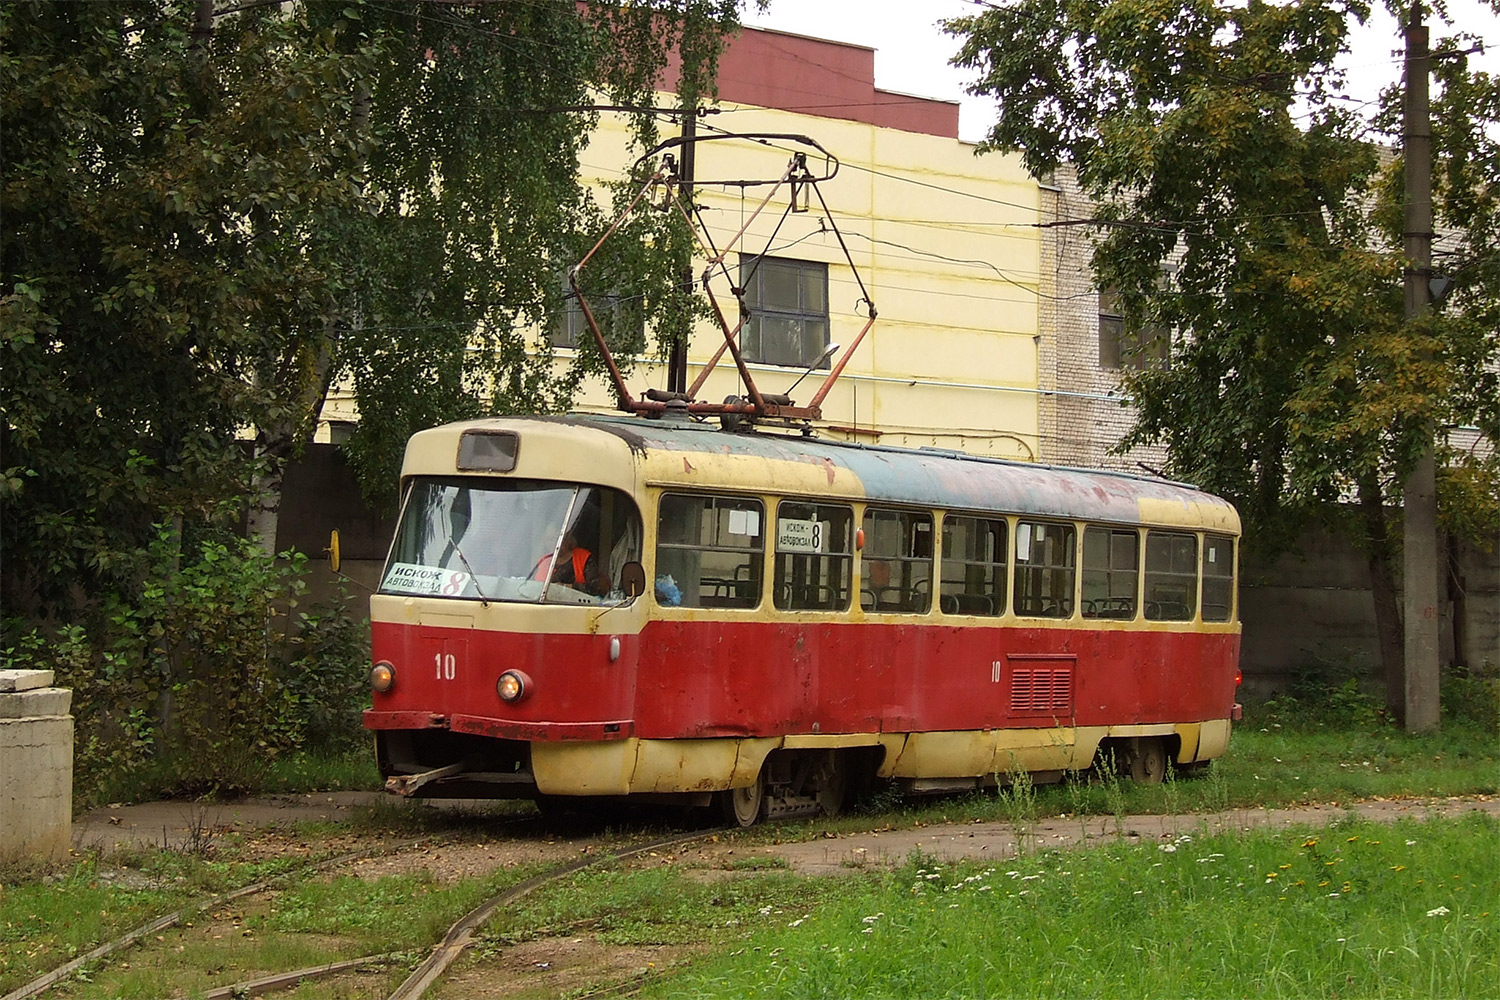 Tver, Tatra T3SU č. 10; Tver — Tver tramway in the early 2000s (2002 — 2006)